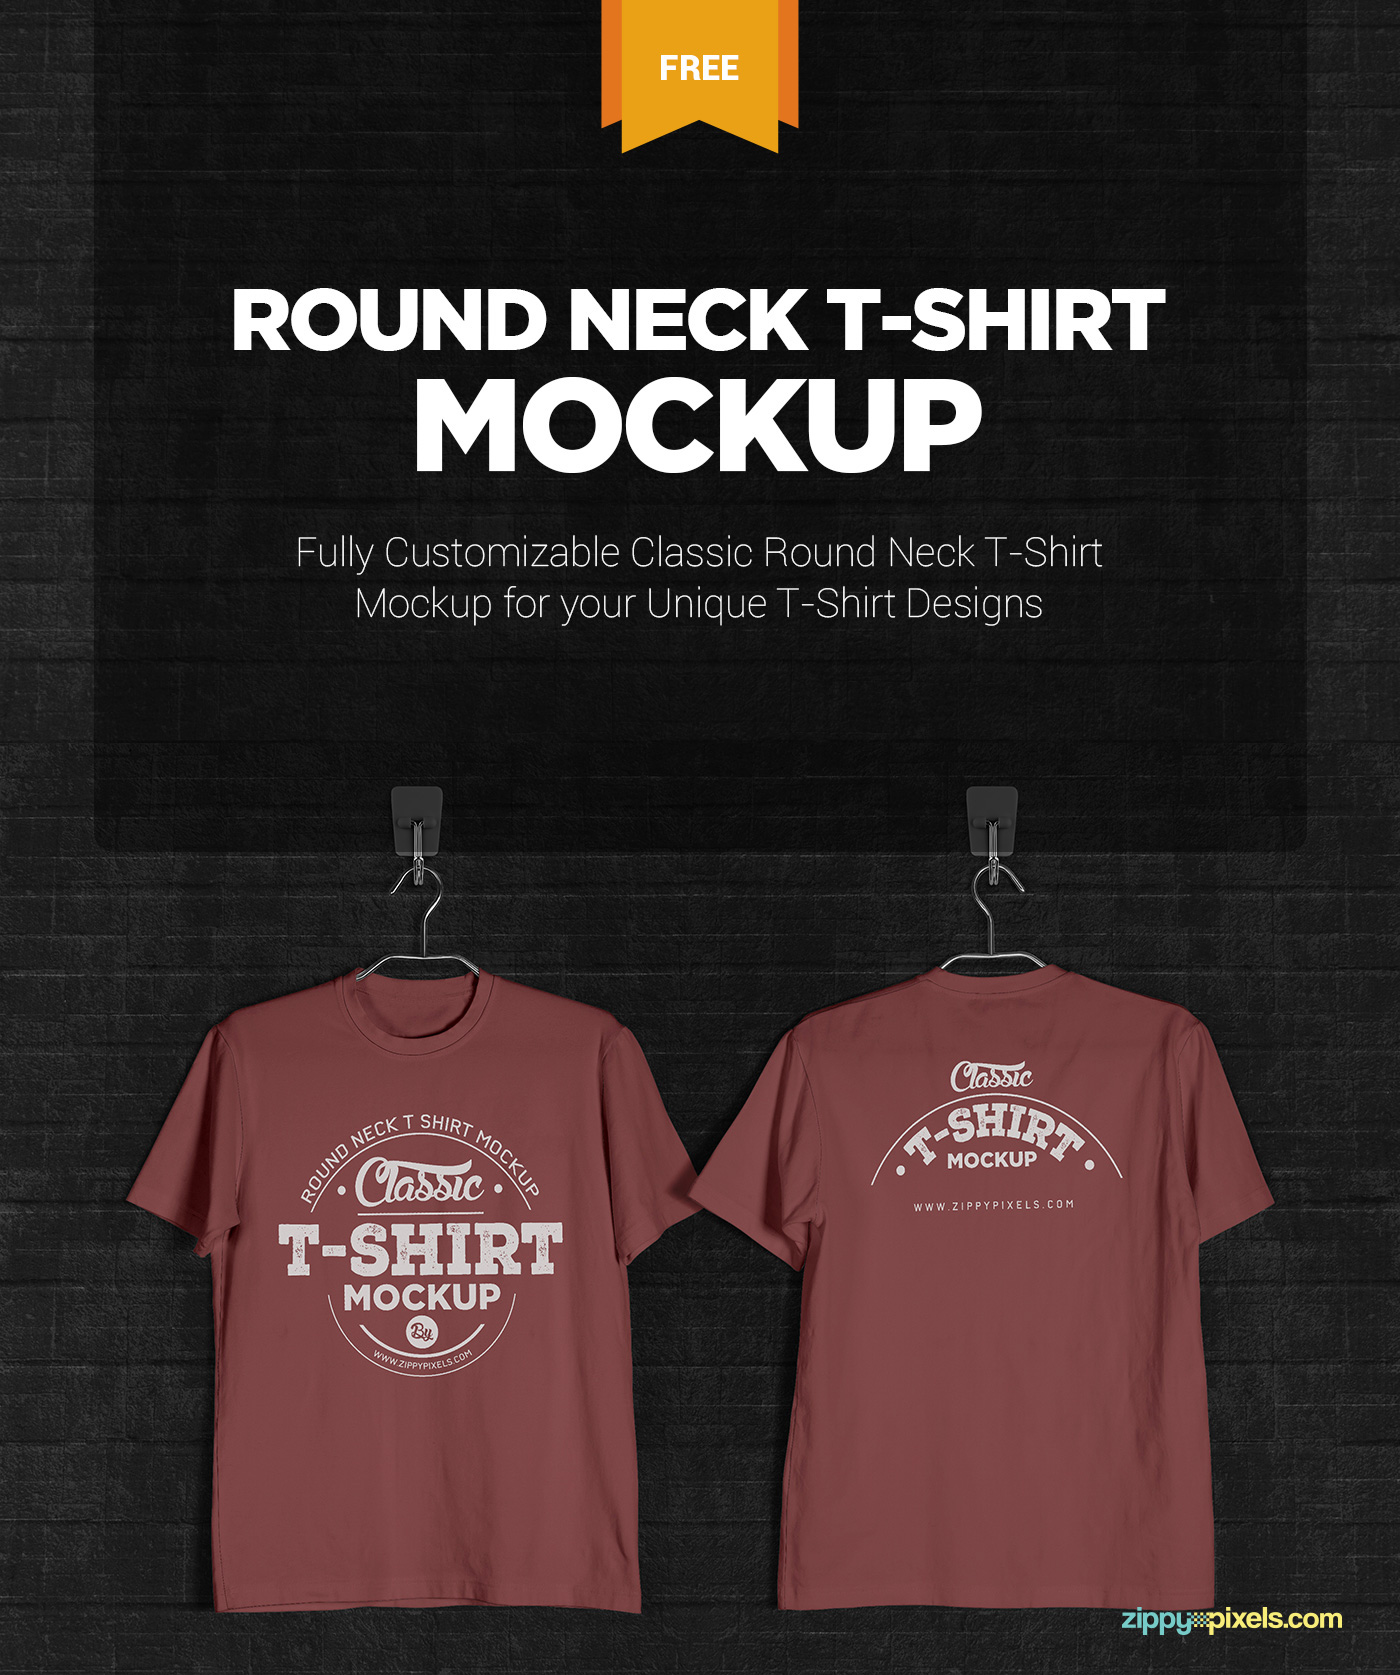 Download Free T-Shirt Mockup - Round Neck on Behance Free Mockups